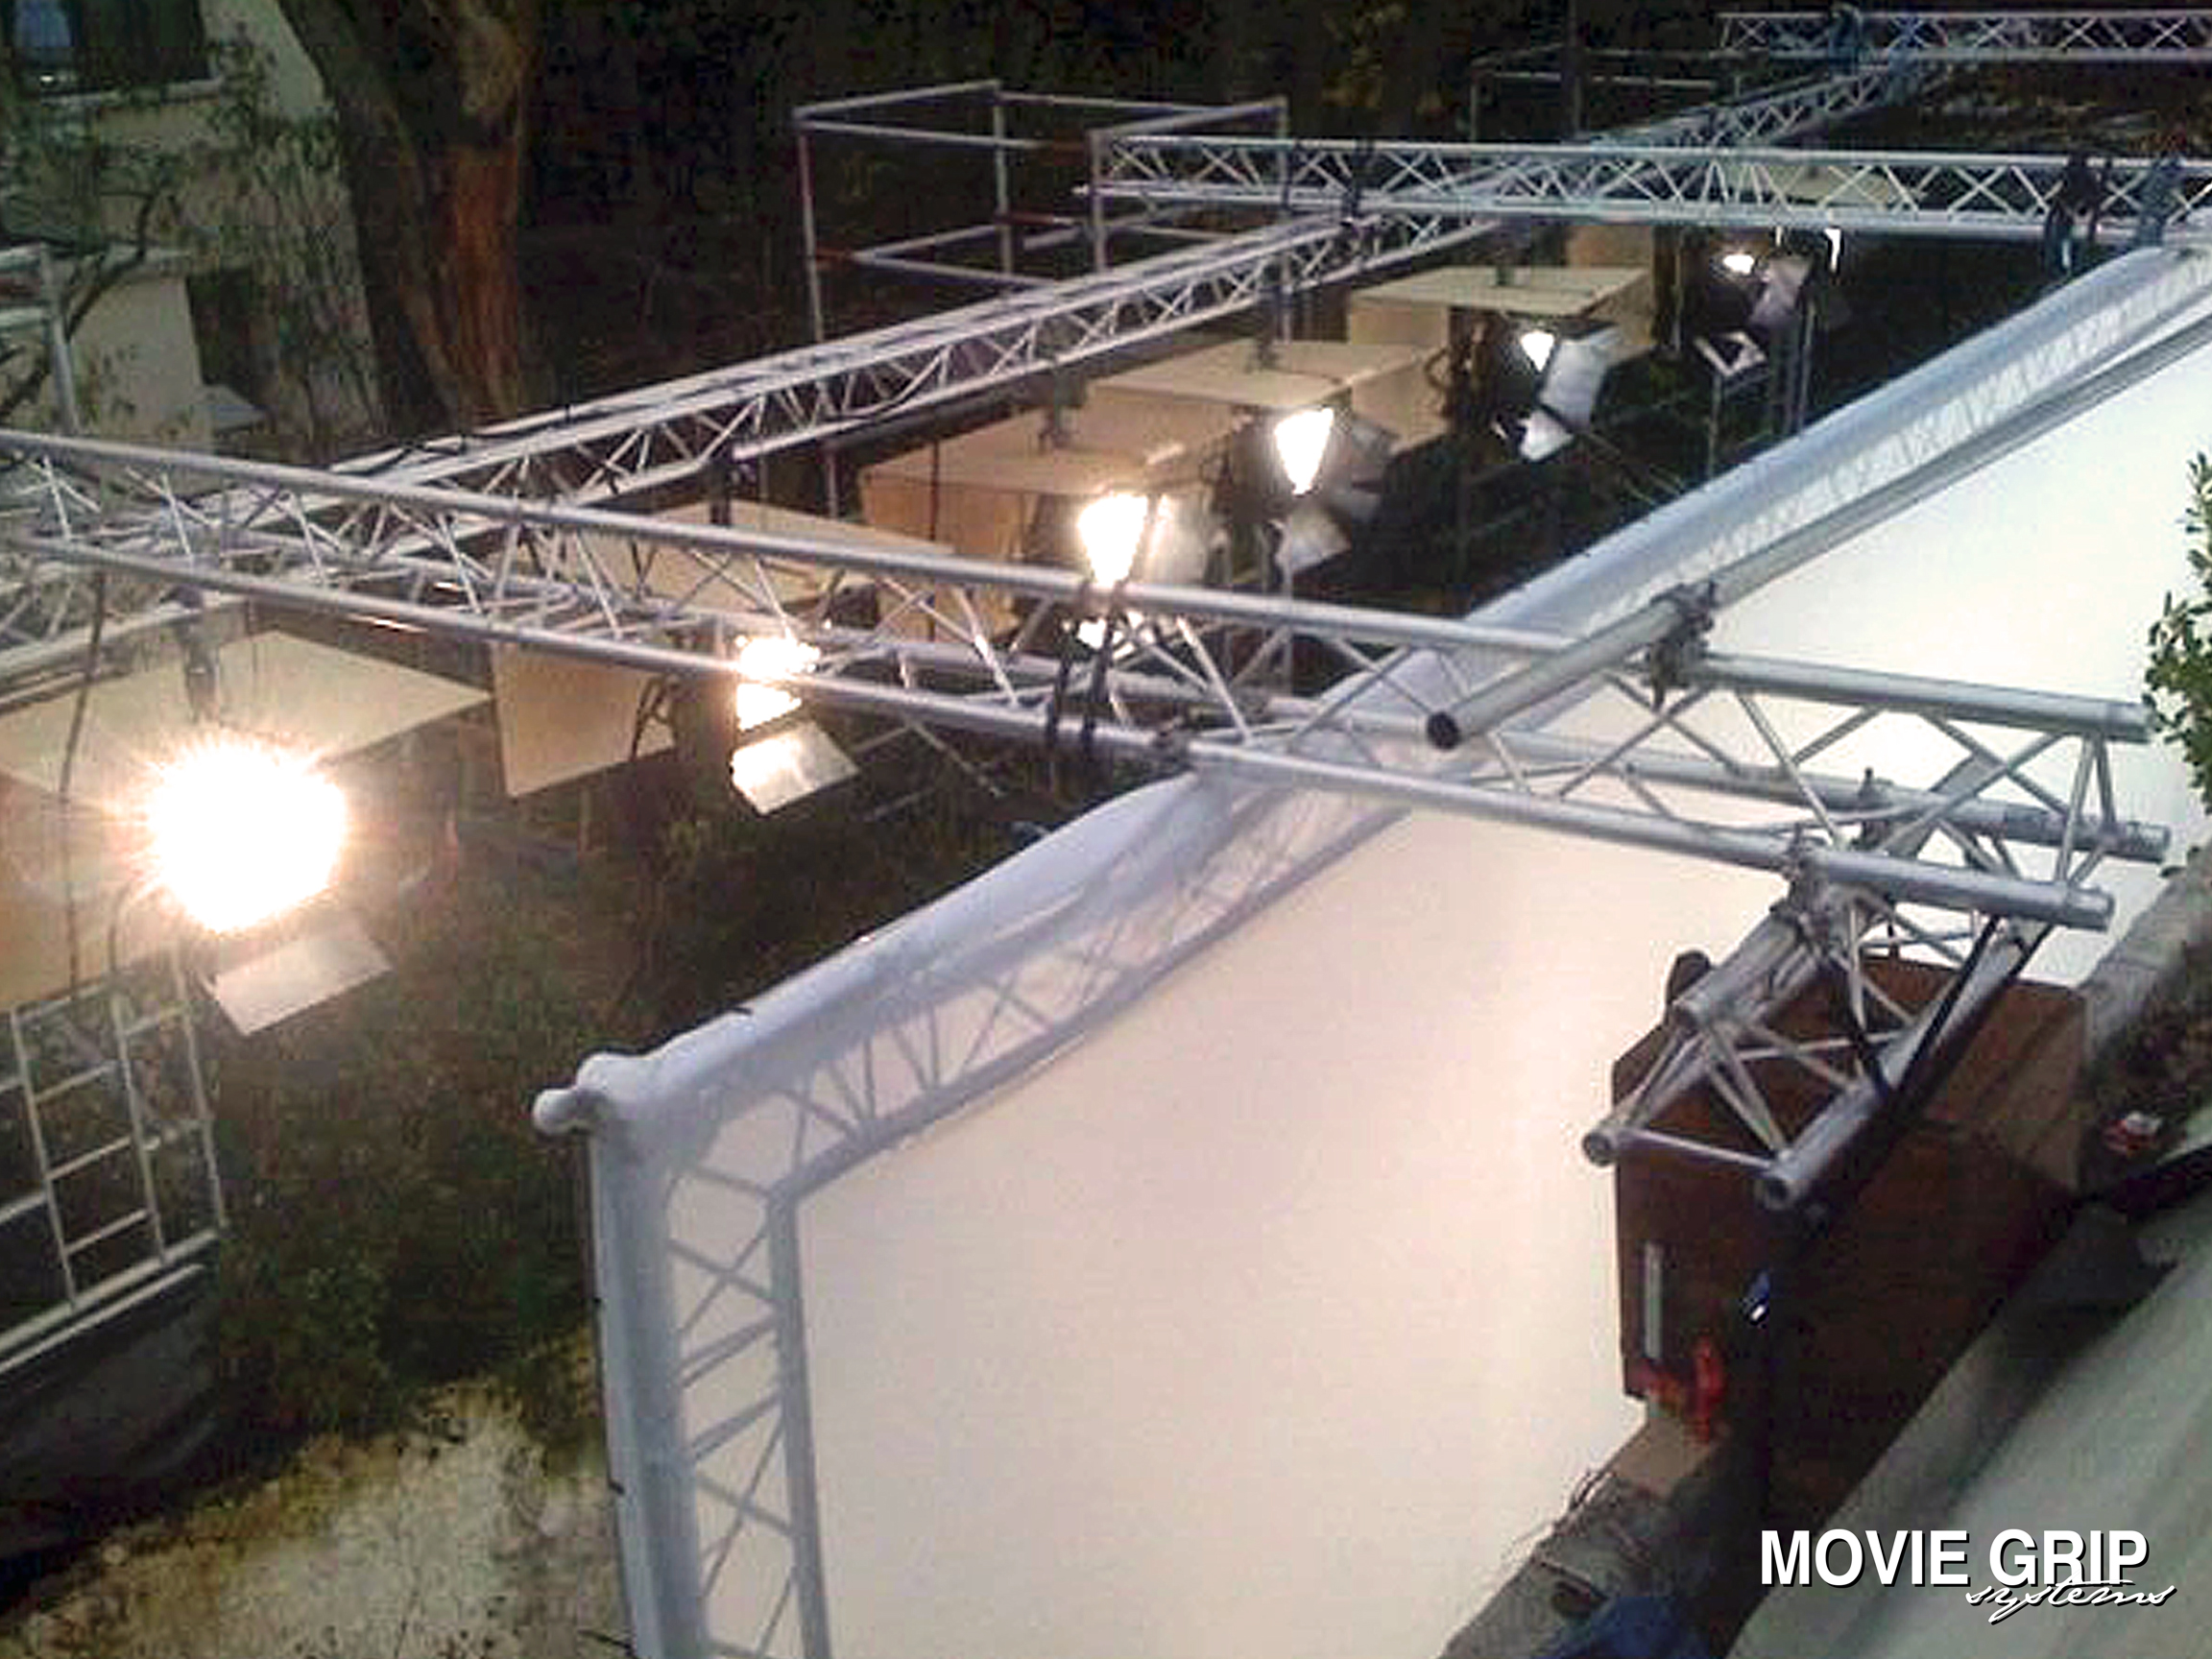 Movie Grip Systems - MOVIE LIGHT